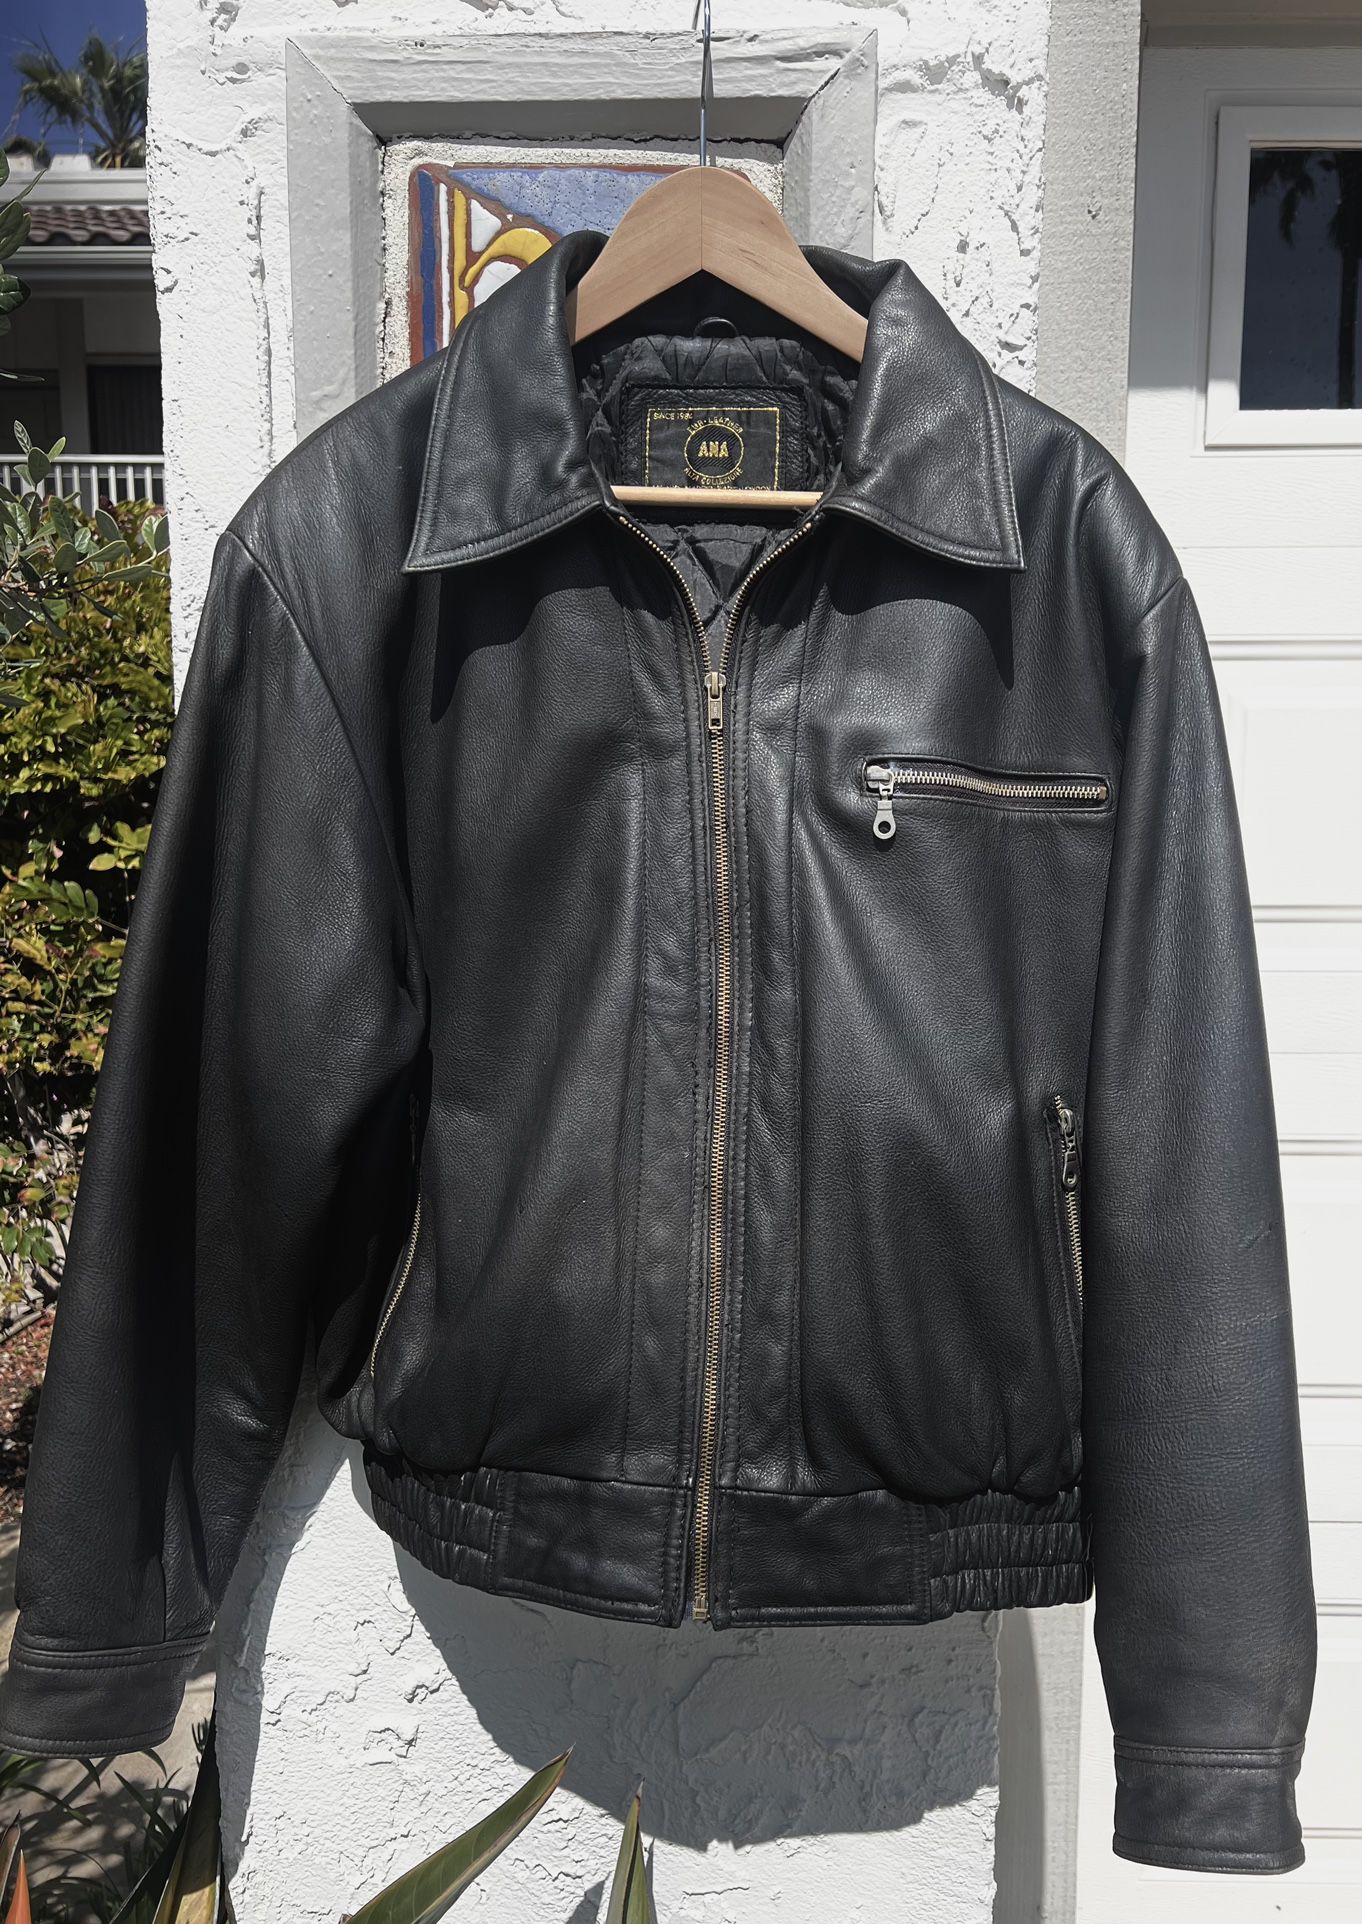 Ana European Men’s Leather Motorcycle Jacket 